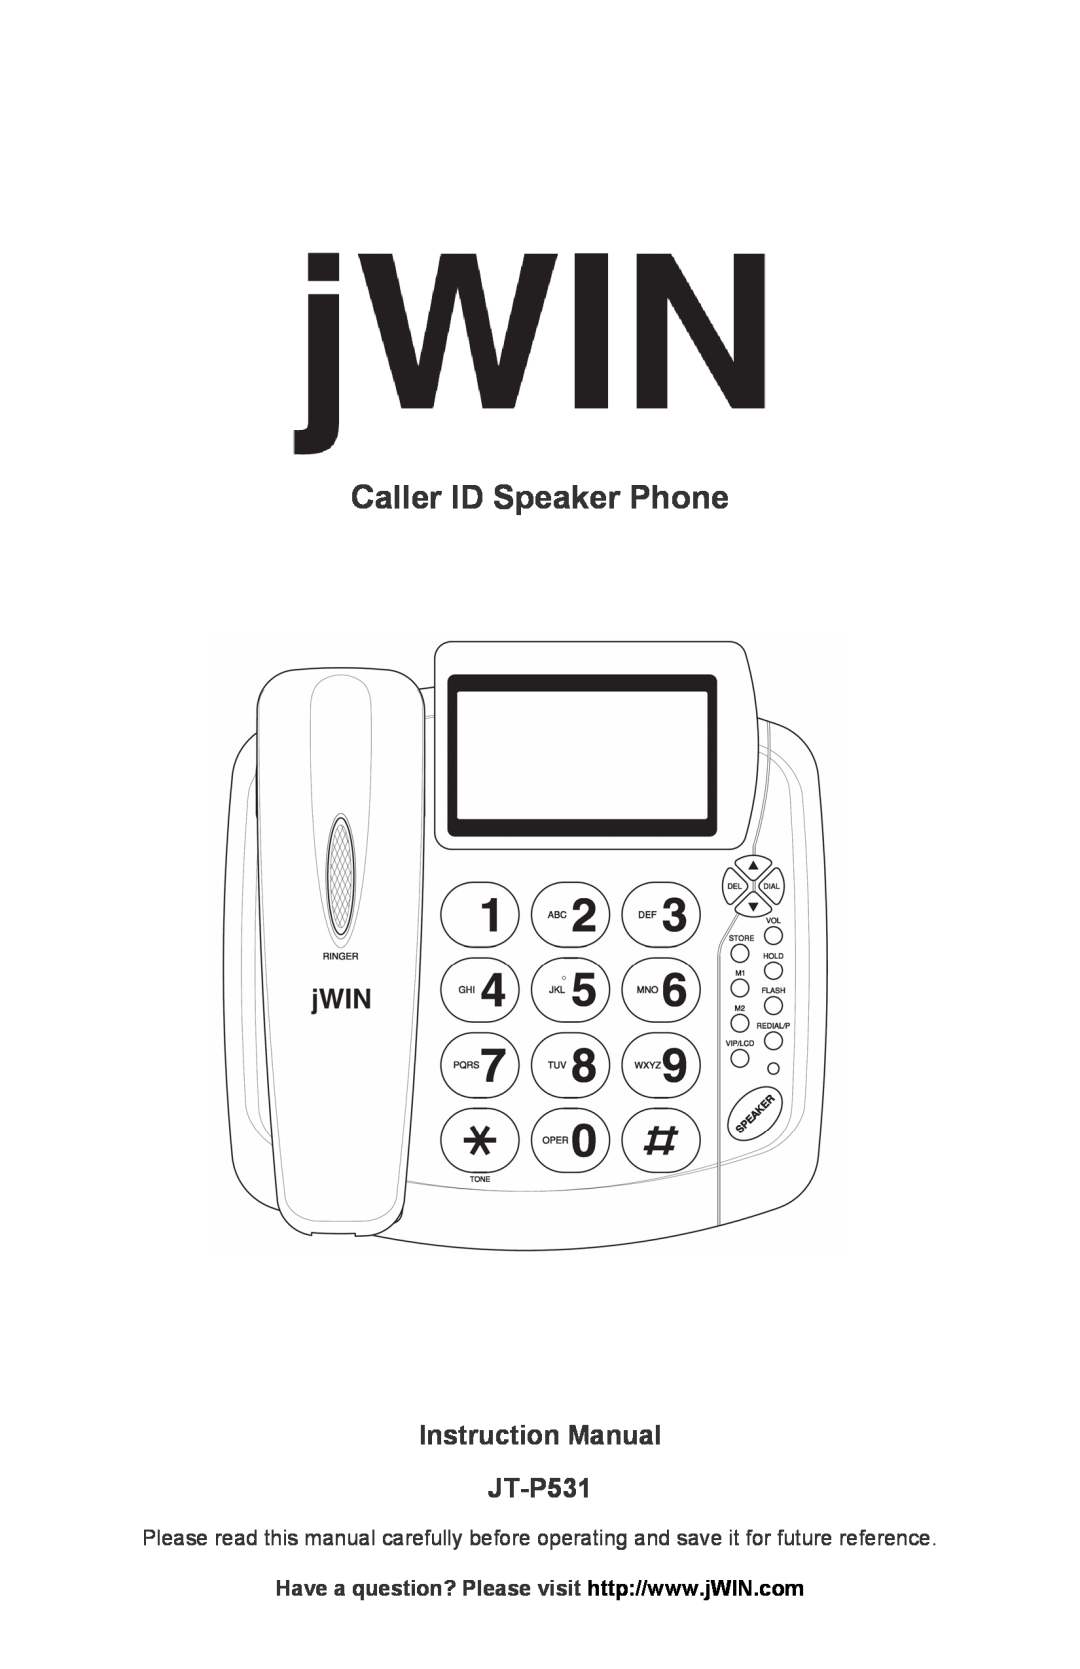 Jwin instruction manual Caller ID Speaker Phone, Instruction Manual JT-P531 